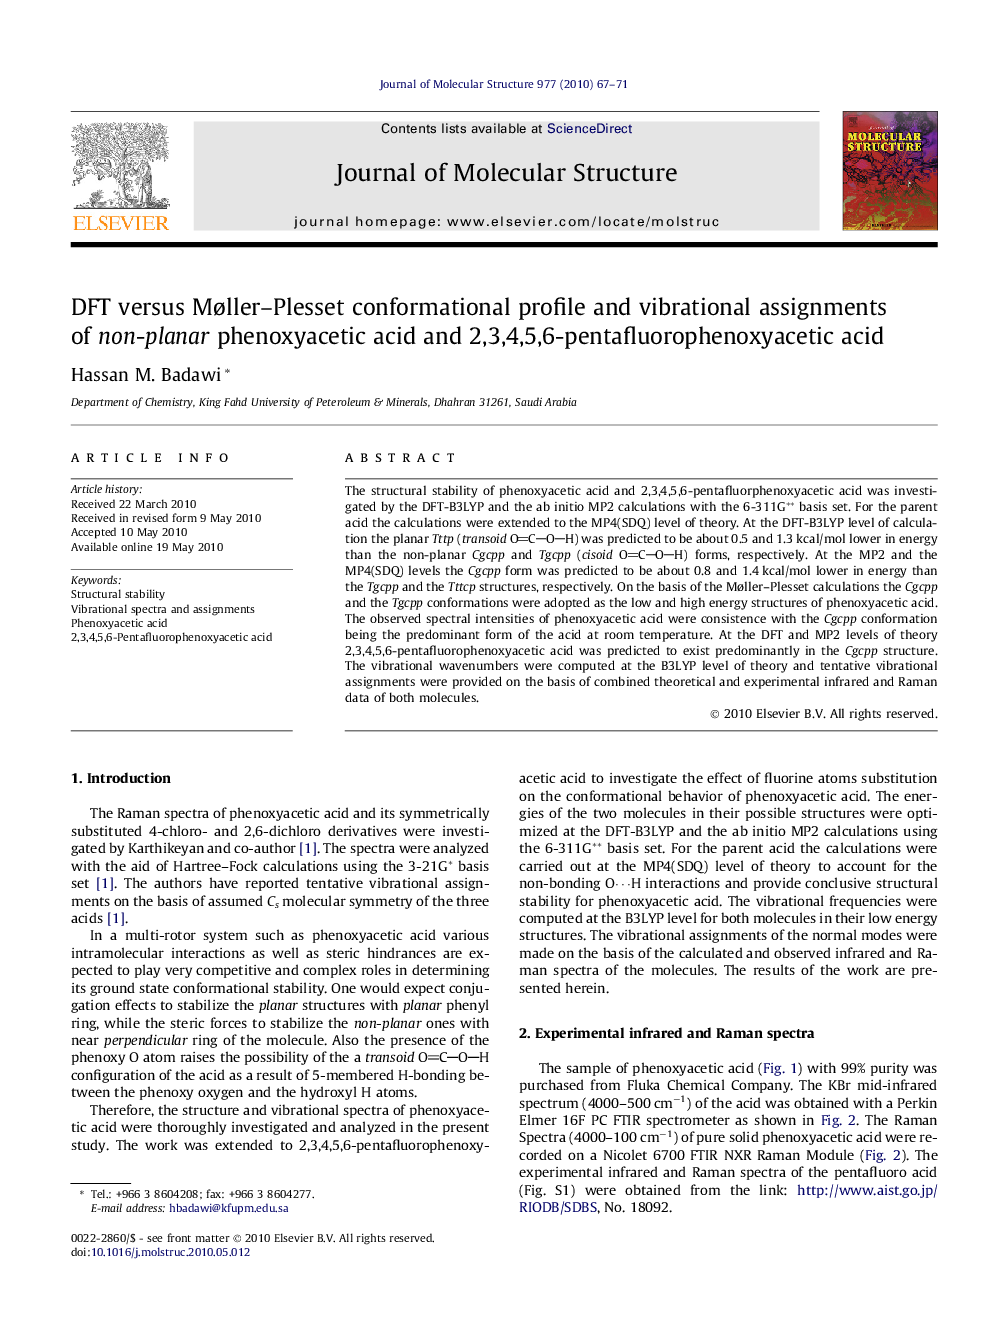 DFT versus MÃ¸ller-Plesset conformational profile and vibrational assignments of non-planar phenoxyacetic acid and 2,3,4,5,6-pentafluorophenoxyacetic acid